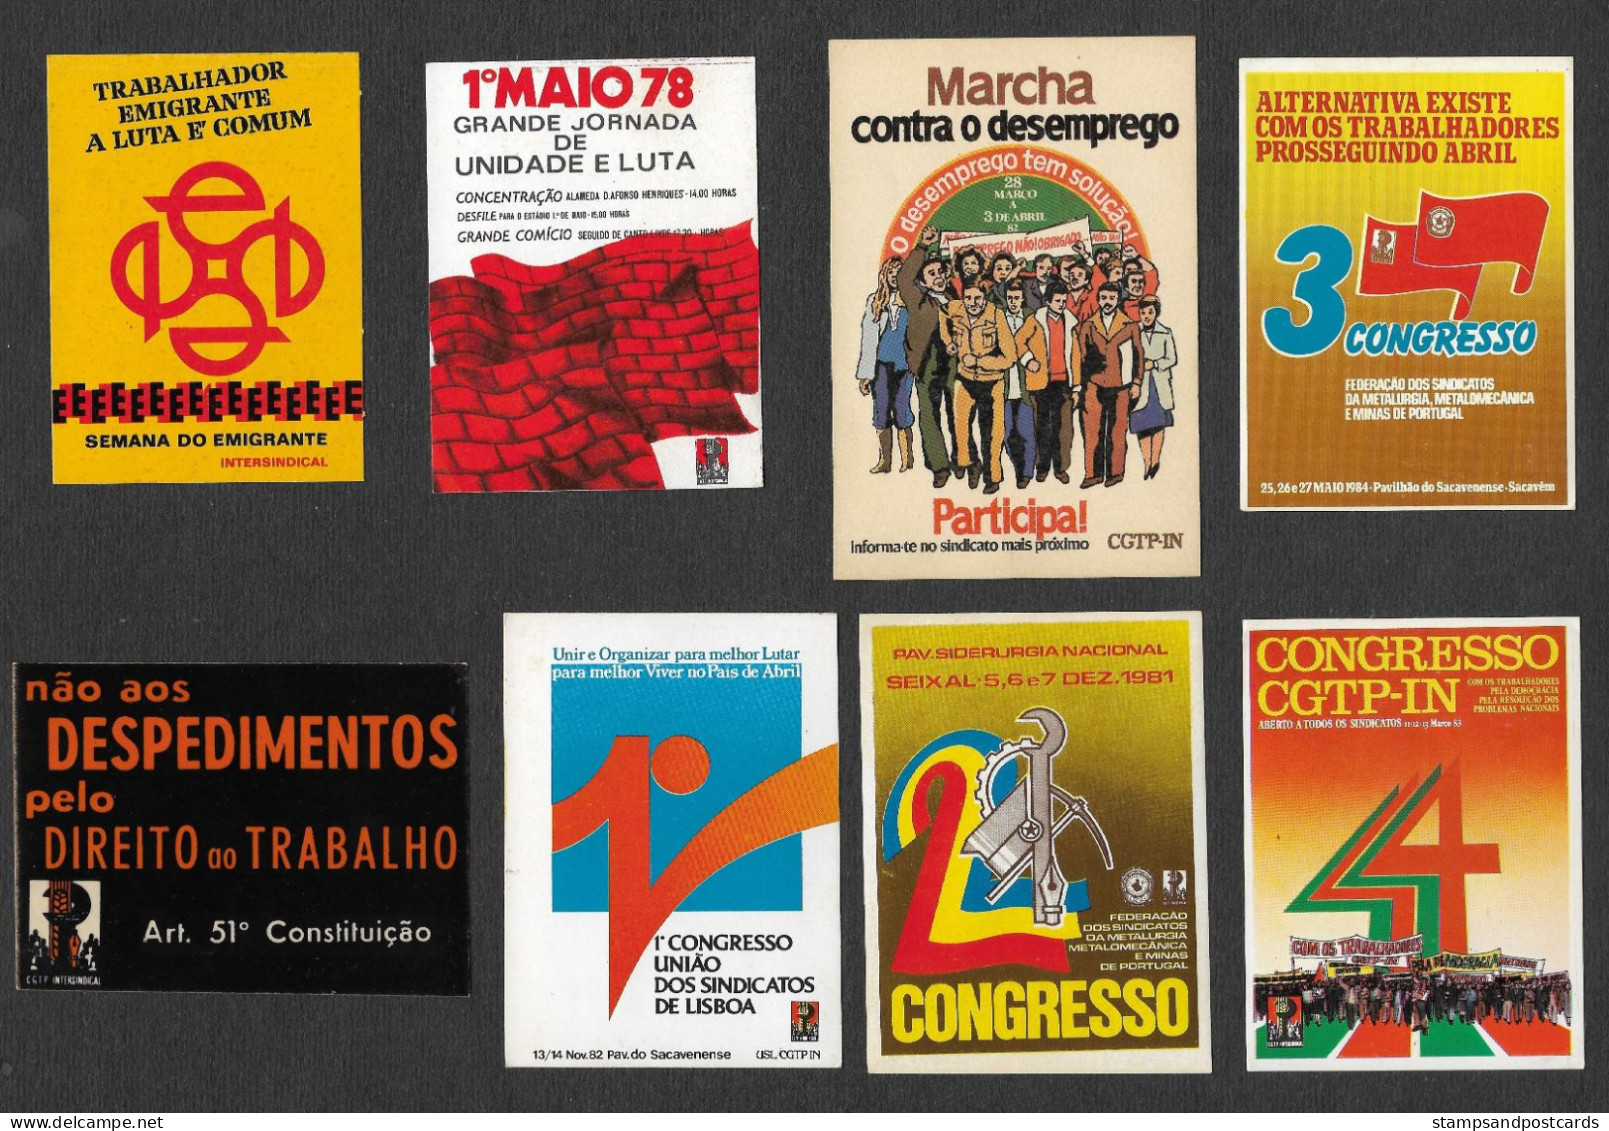 Portugal 44 Autocollant Politique 1976 - 1982 CGTP CGT Centrale Syndicale Workers Union Central 44 Political Sticker - Aufkleber